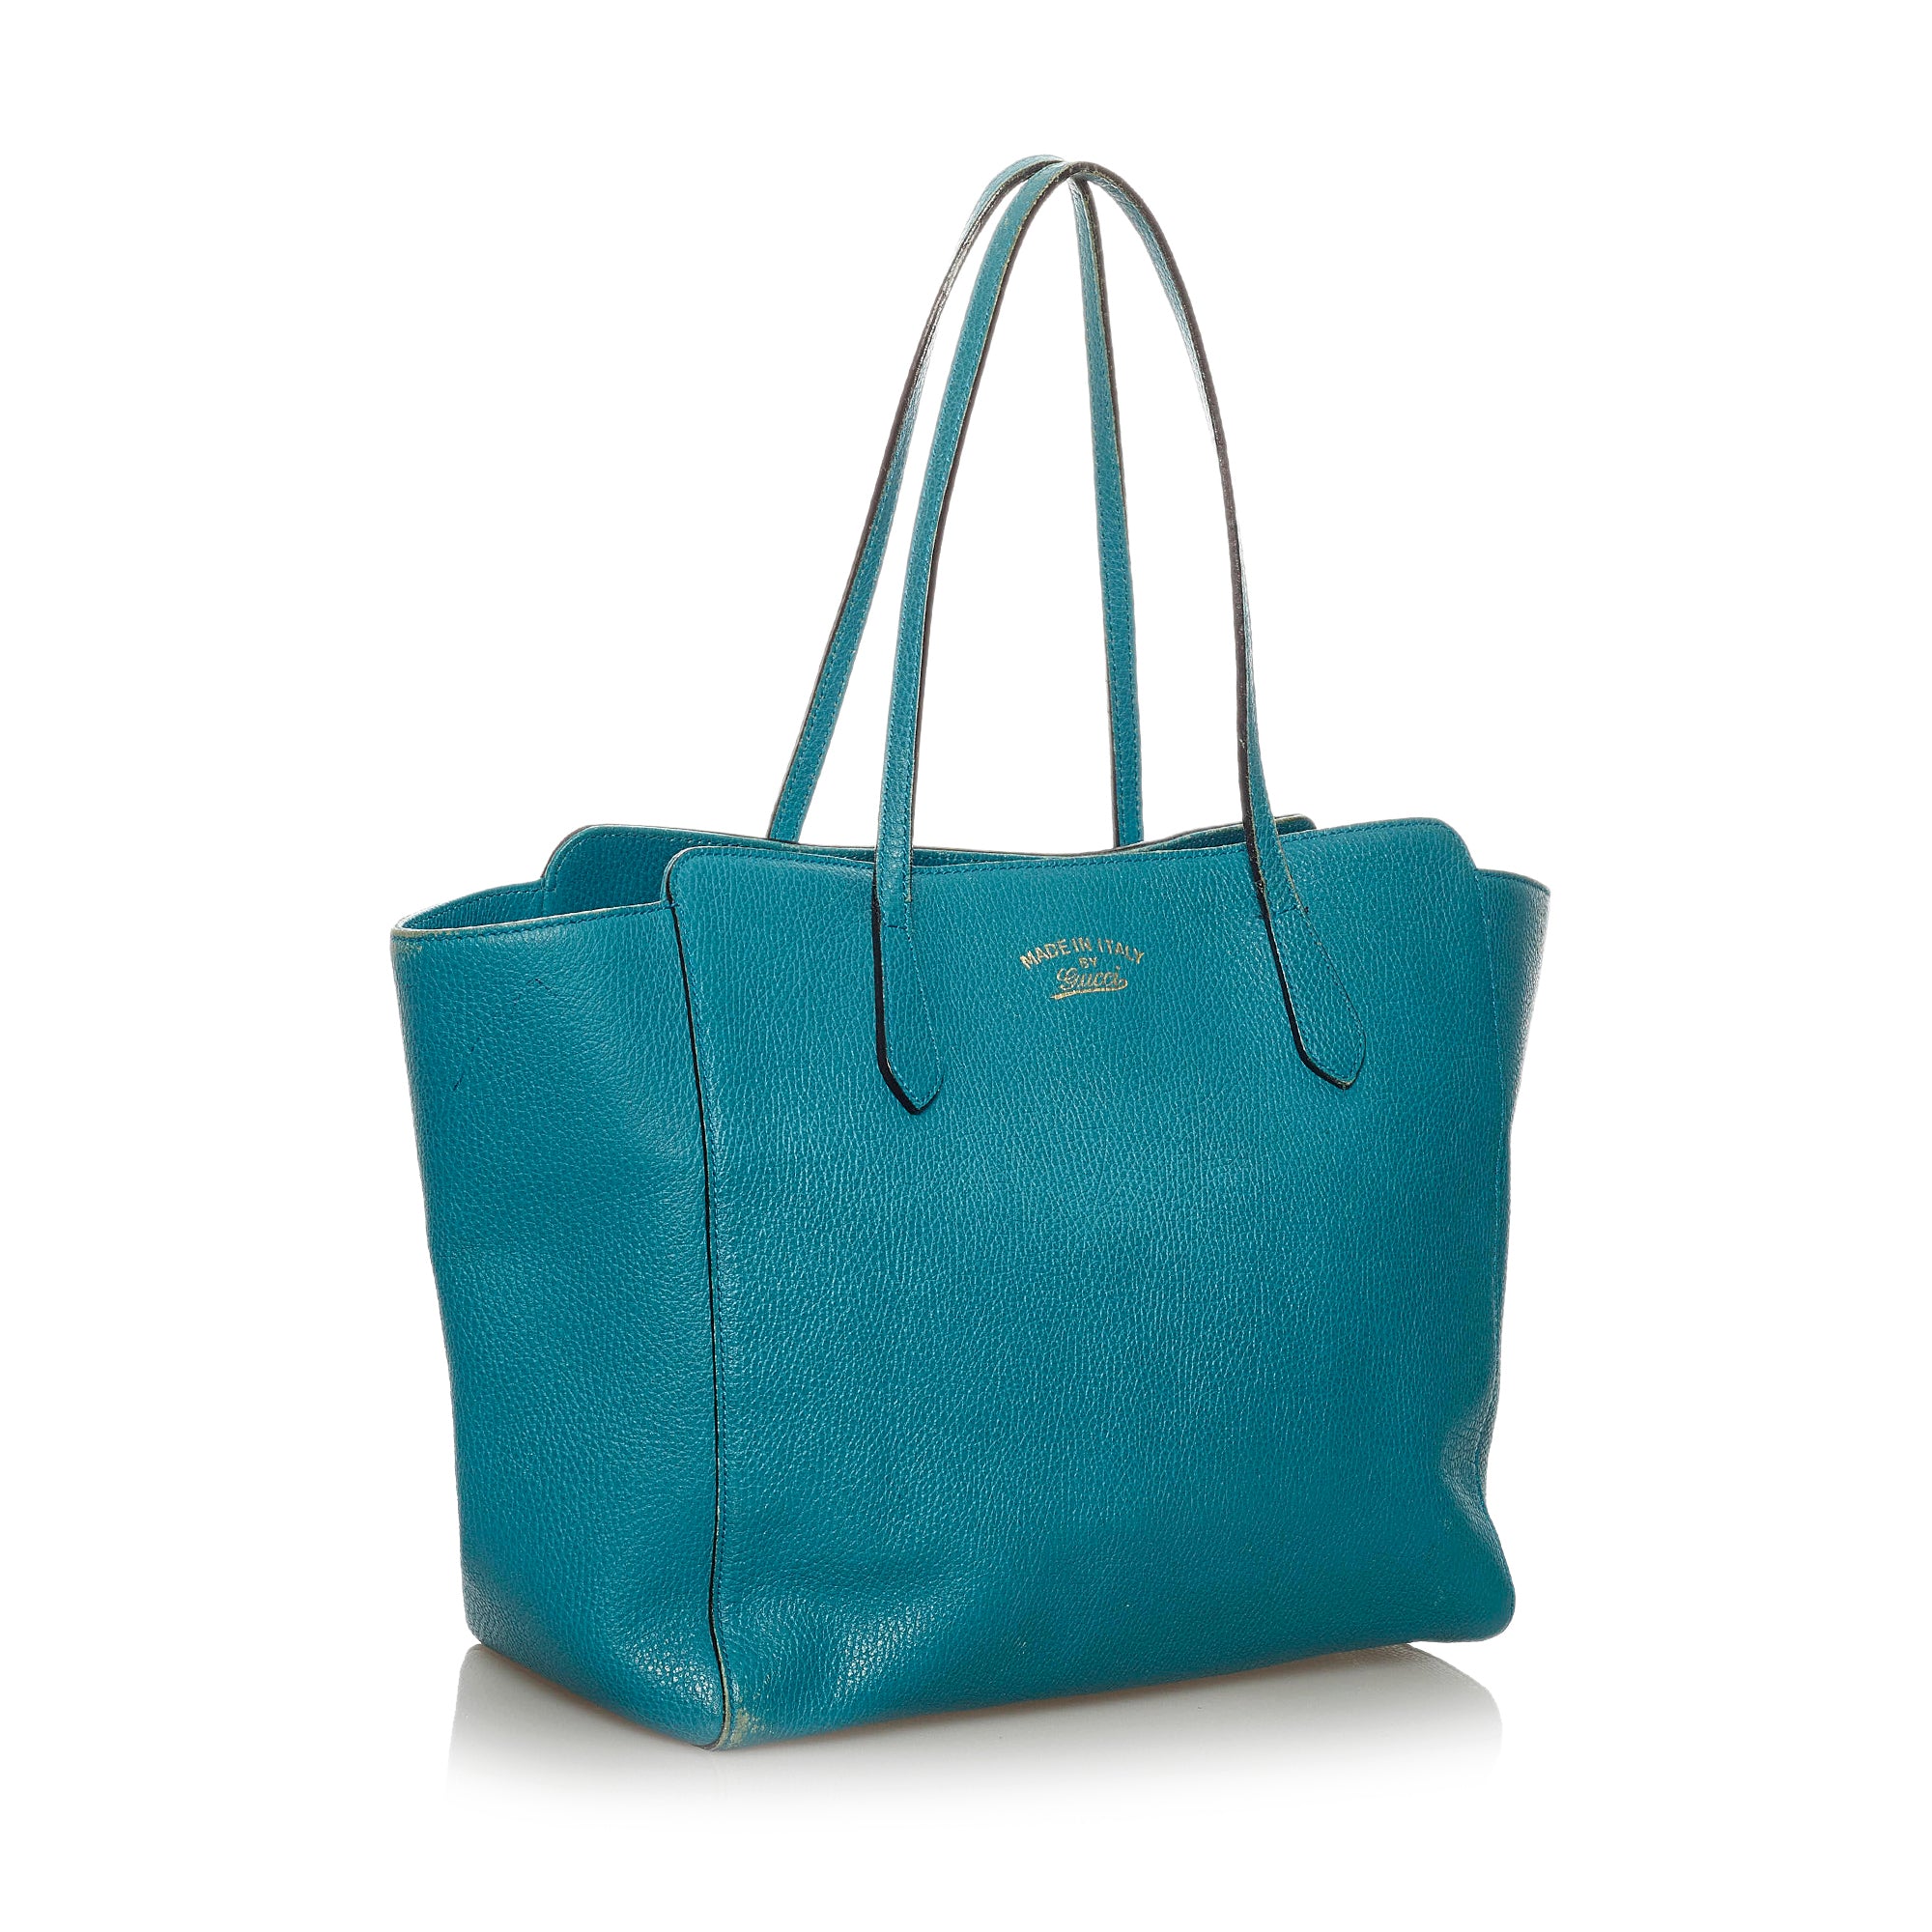 Gucci, Bags, Gucci Navy Blue Tote Bag